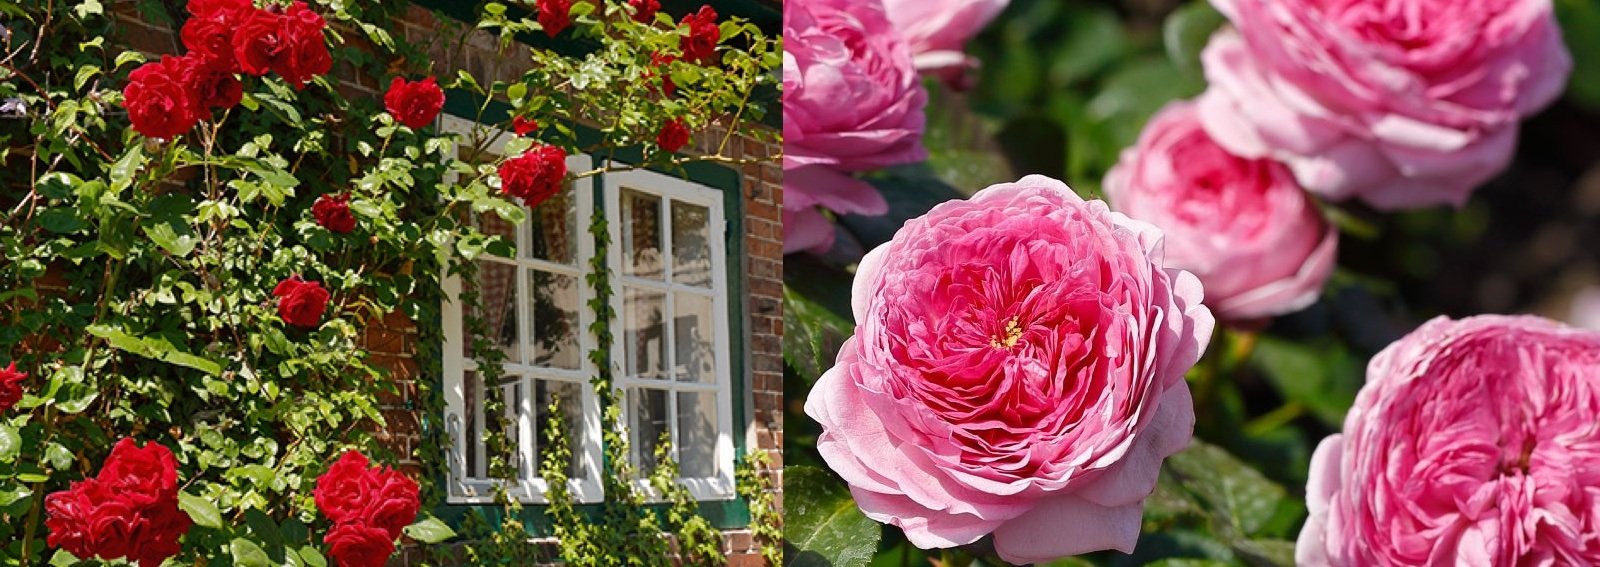 vindue vitamin Støv Roser i rosenbedet - Dyrkning, gødning og beskæring